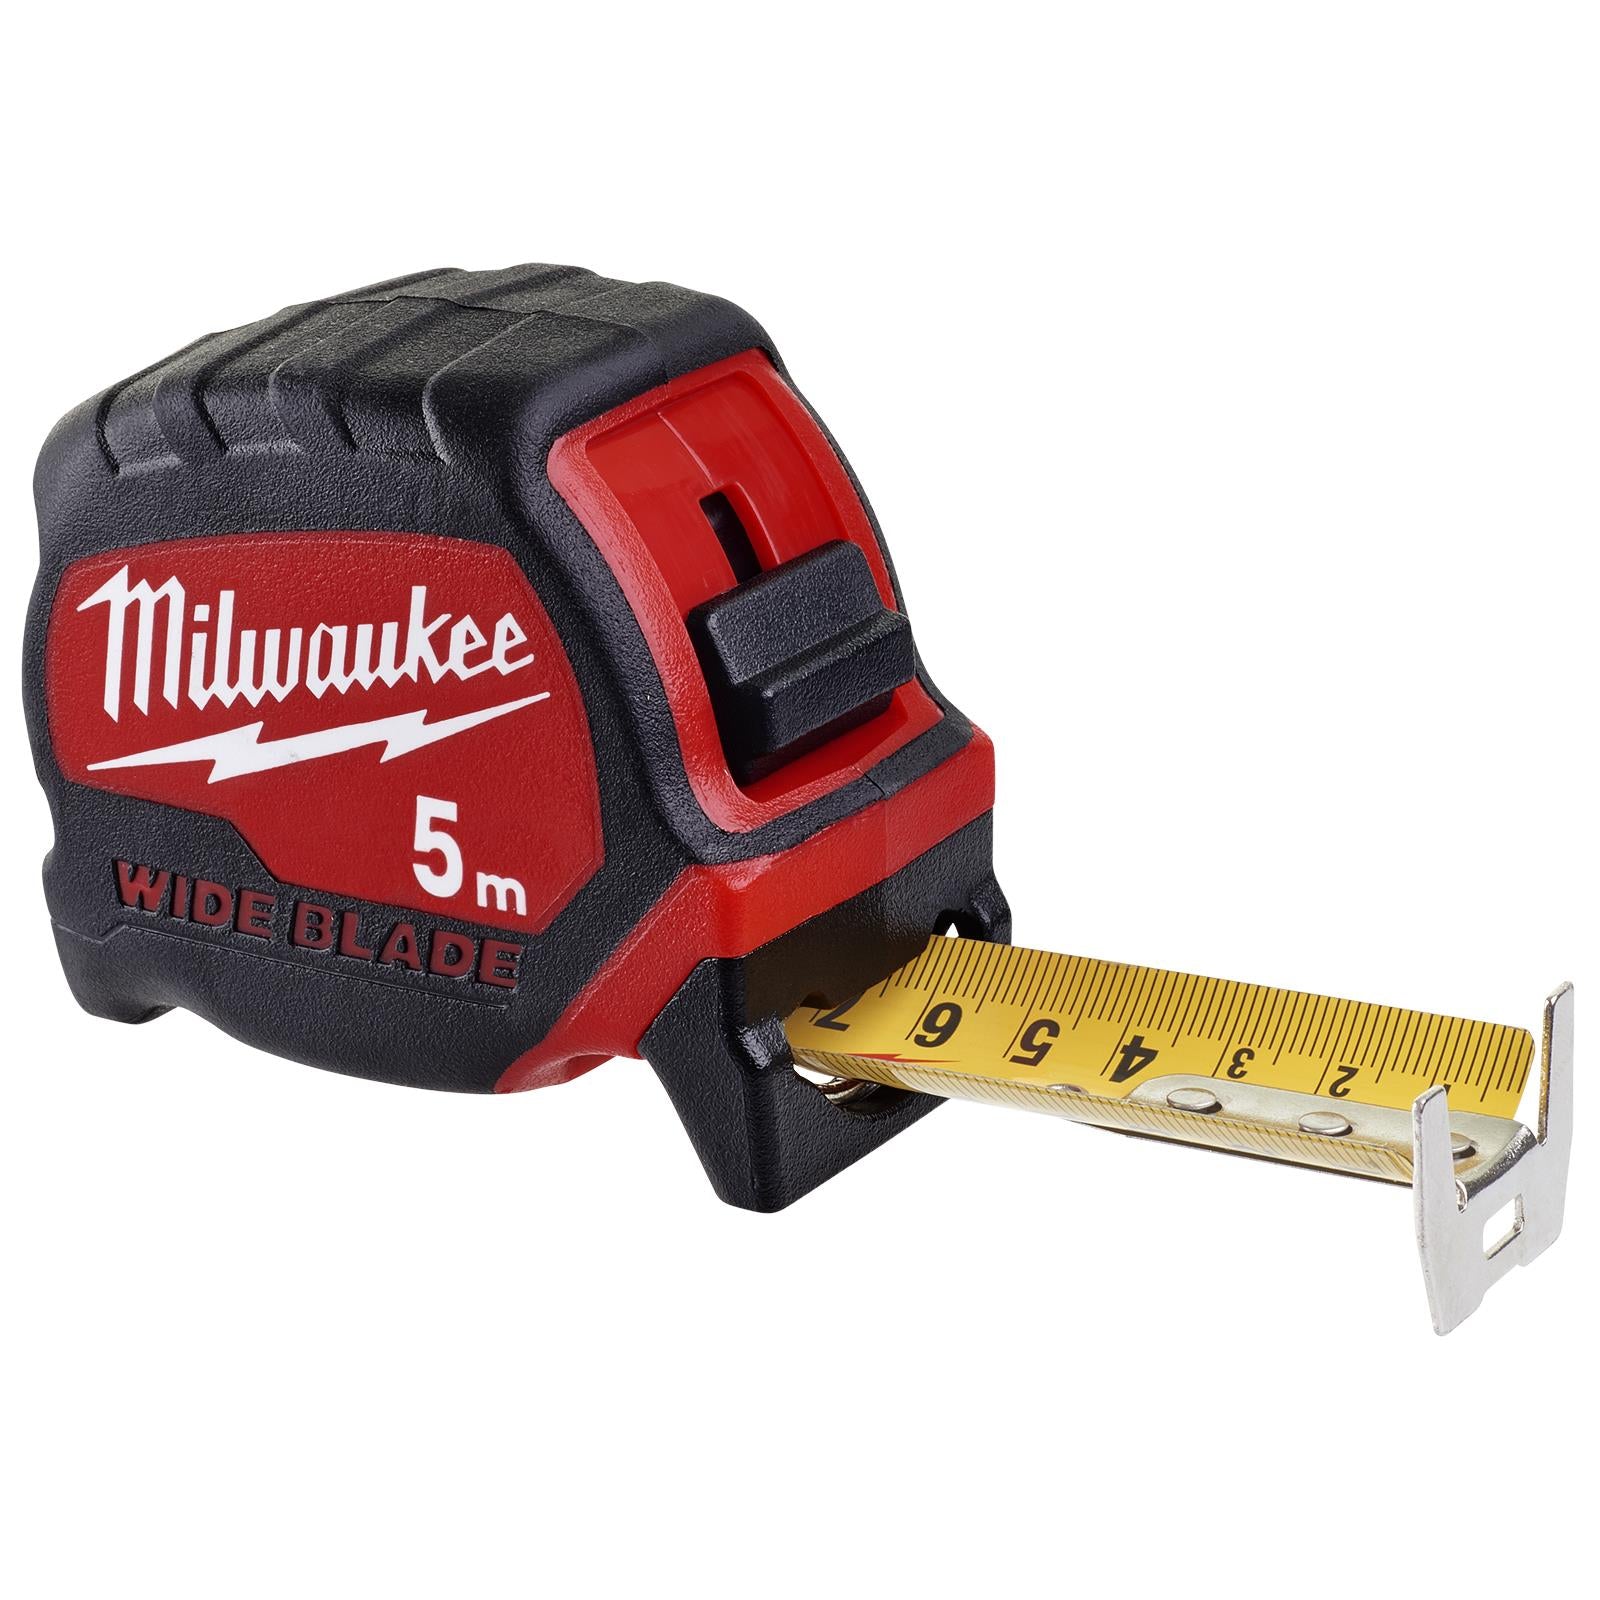 Milwaukee Tape Measure 5m Premium Wide Blade 33mm Metric